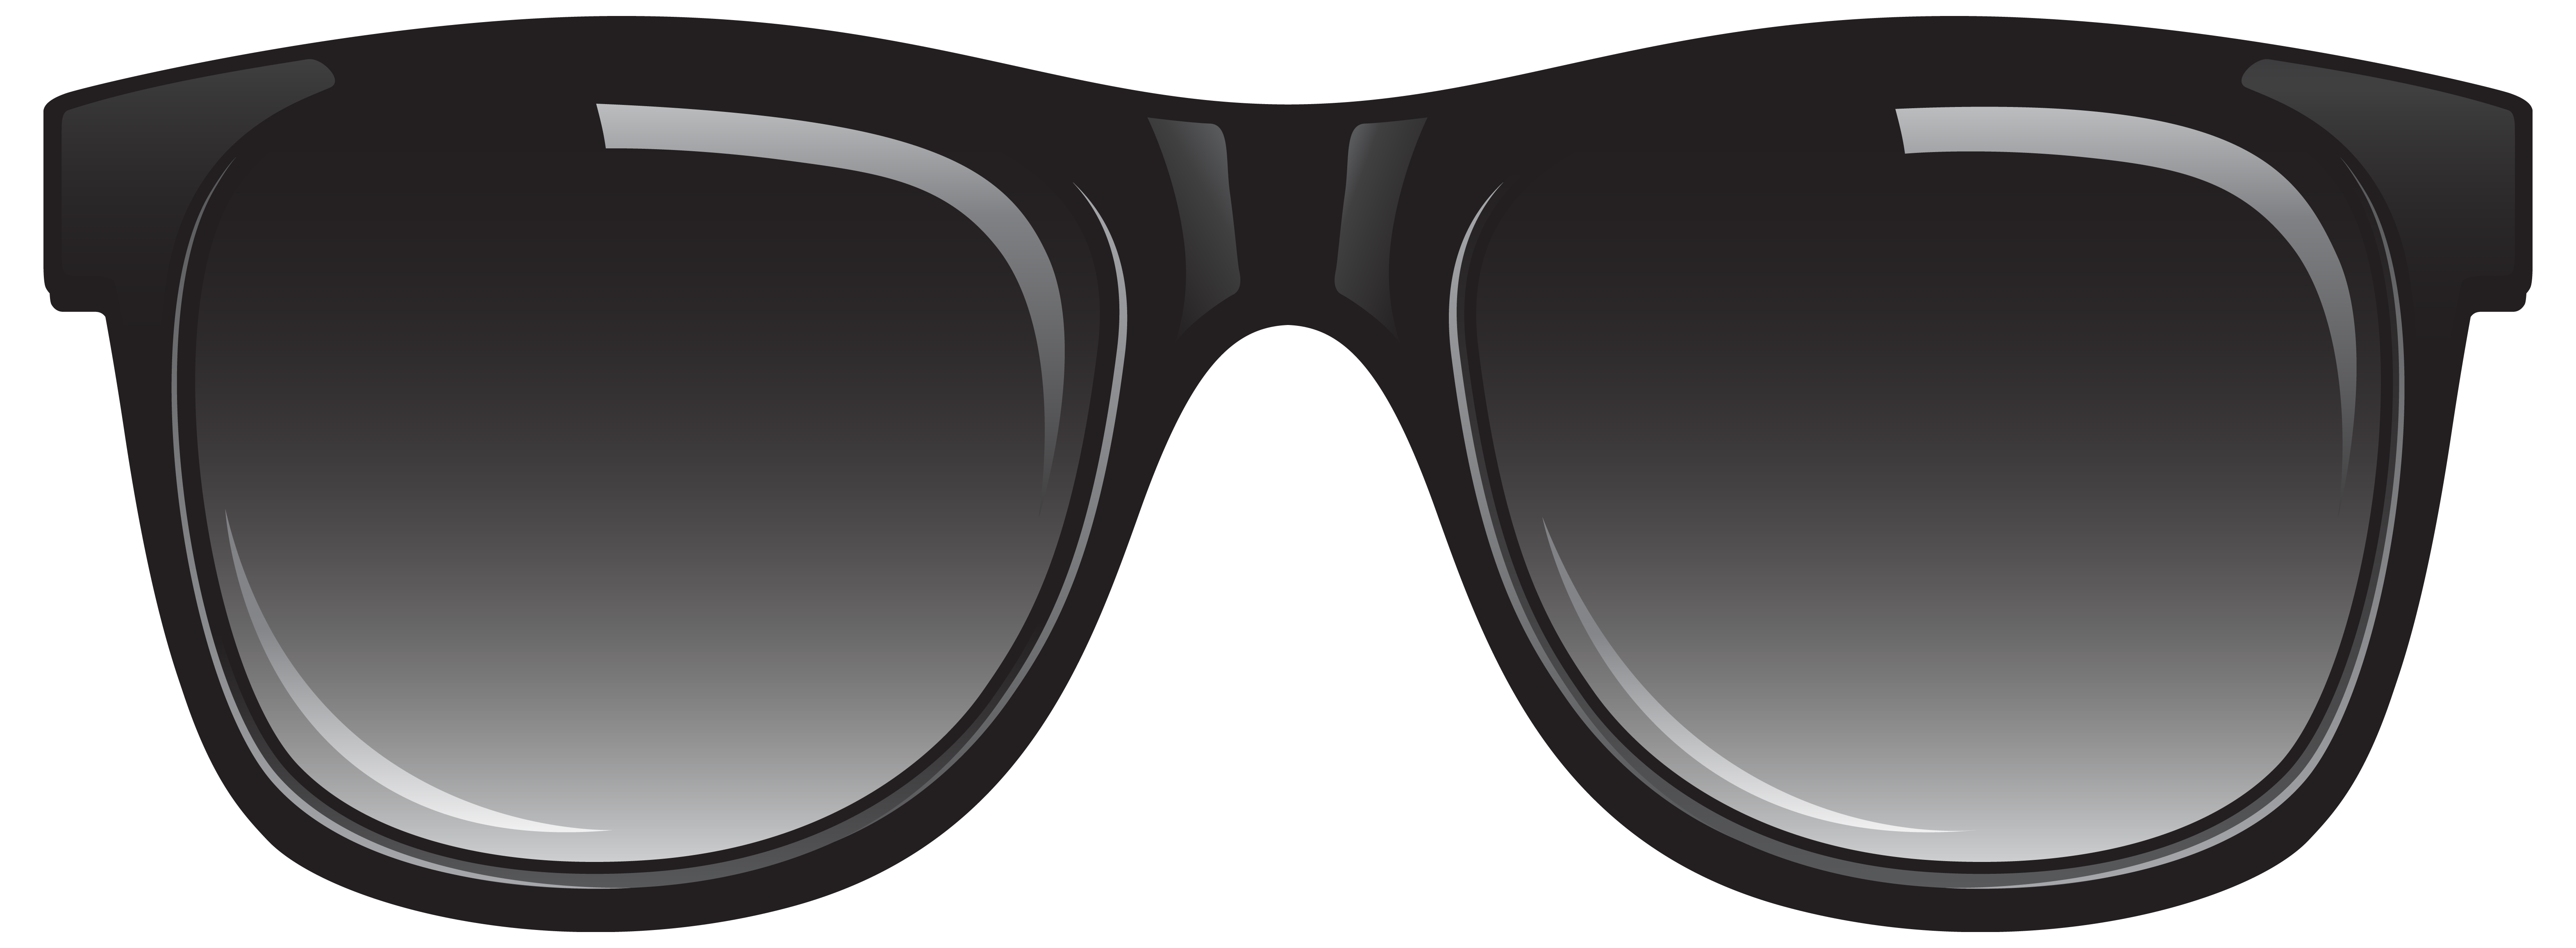 Carrera Sunglasses Black Glasses Ray-Ban PNG